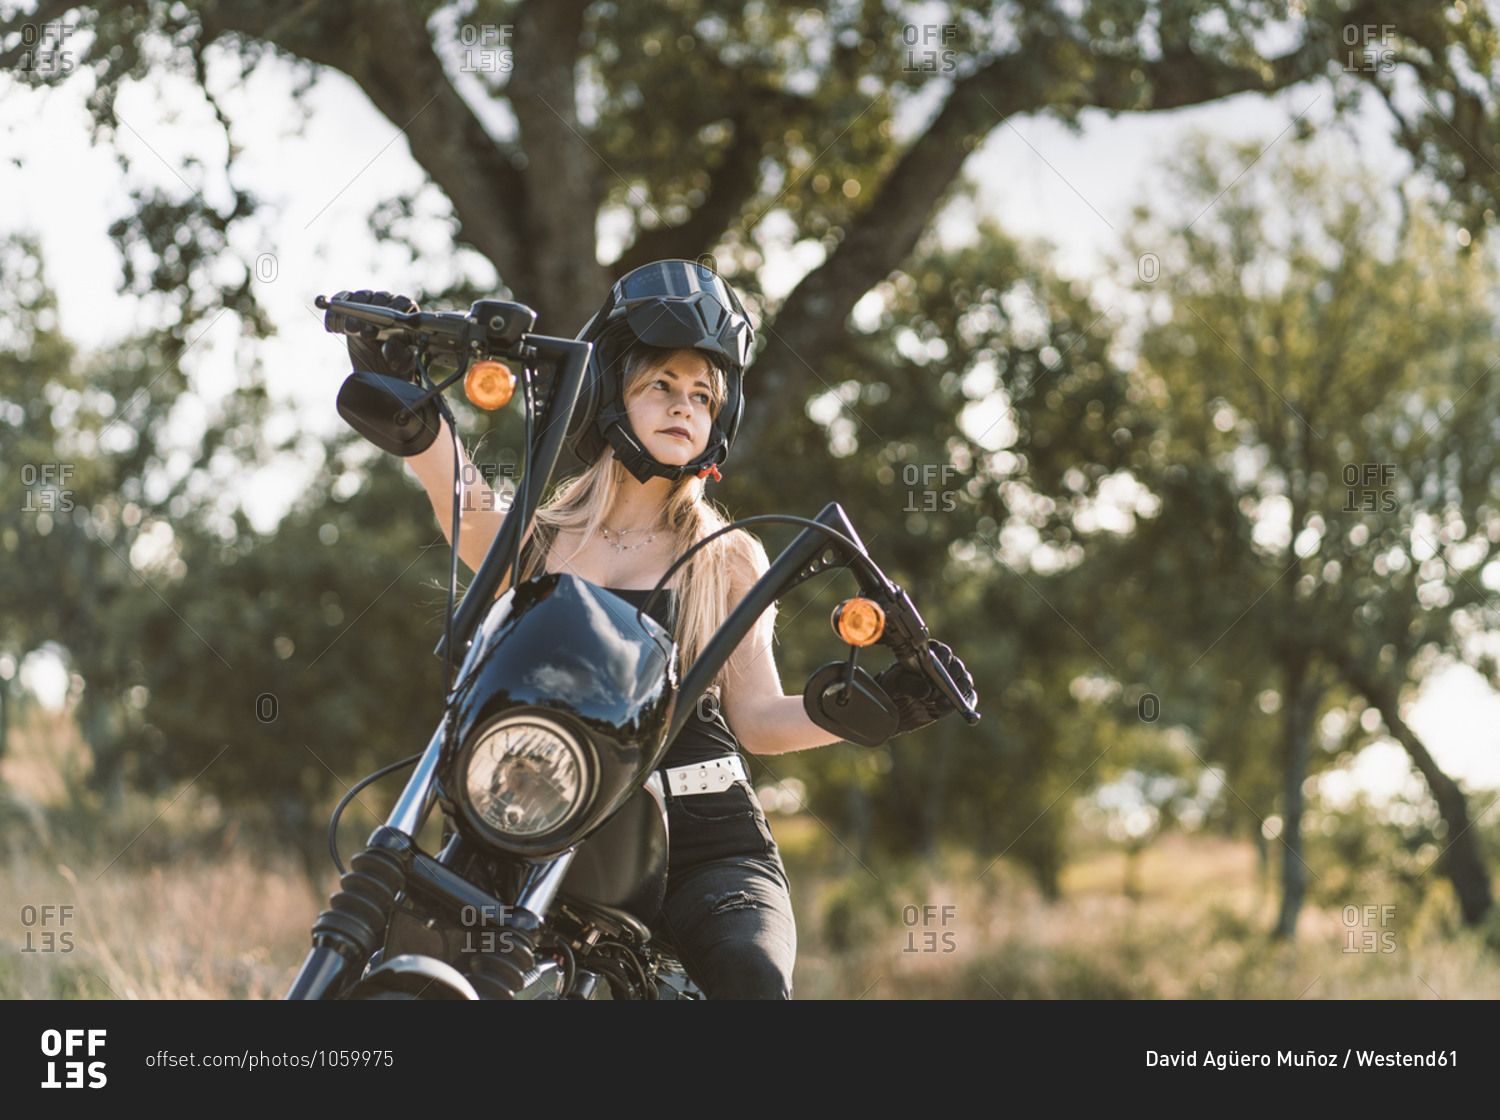 Beautiful woman wearing crash helmet while sitting on motorcycle against tree